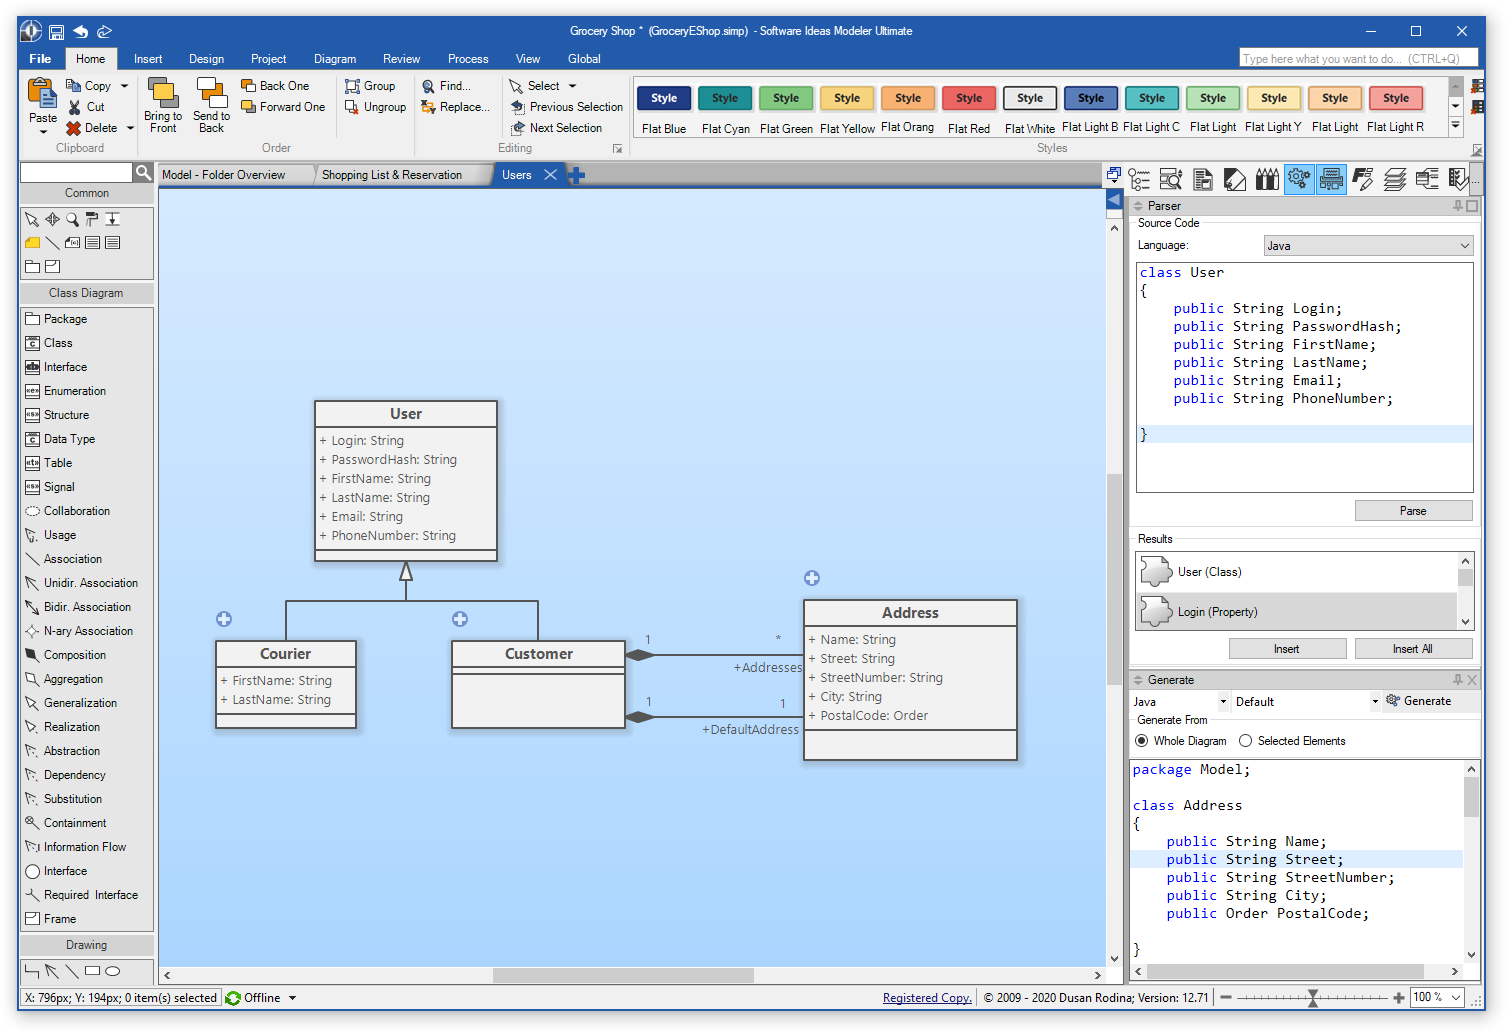 Java UML Diagram Tool - Software Ideas Modeler